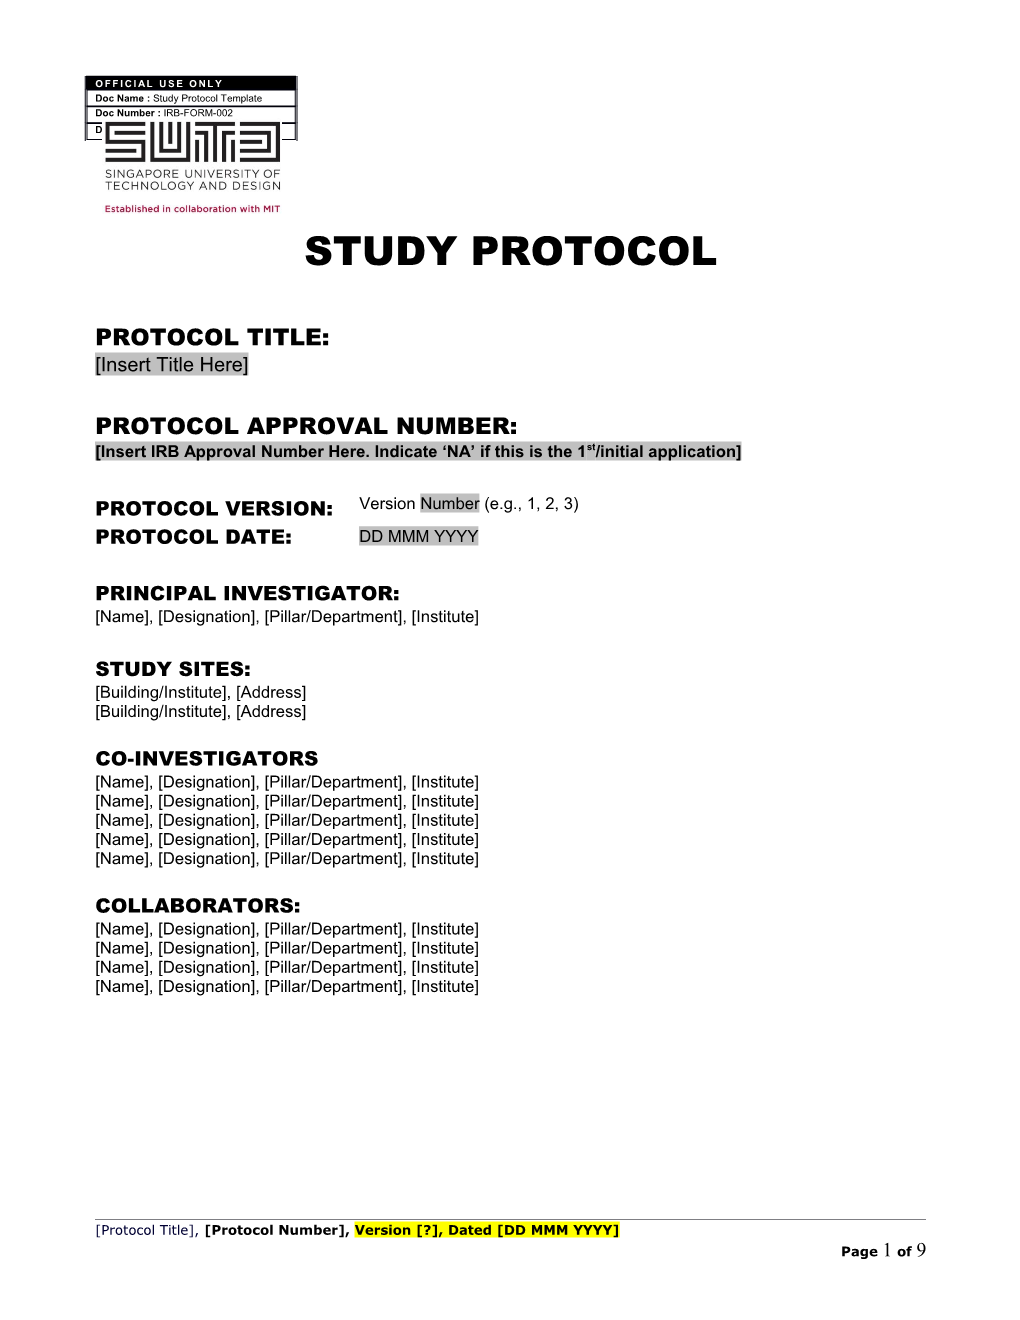 IRB Study Protocol Form